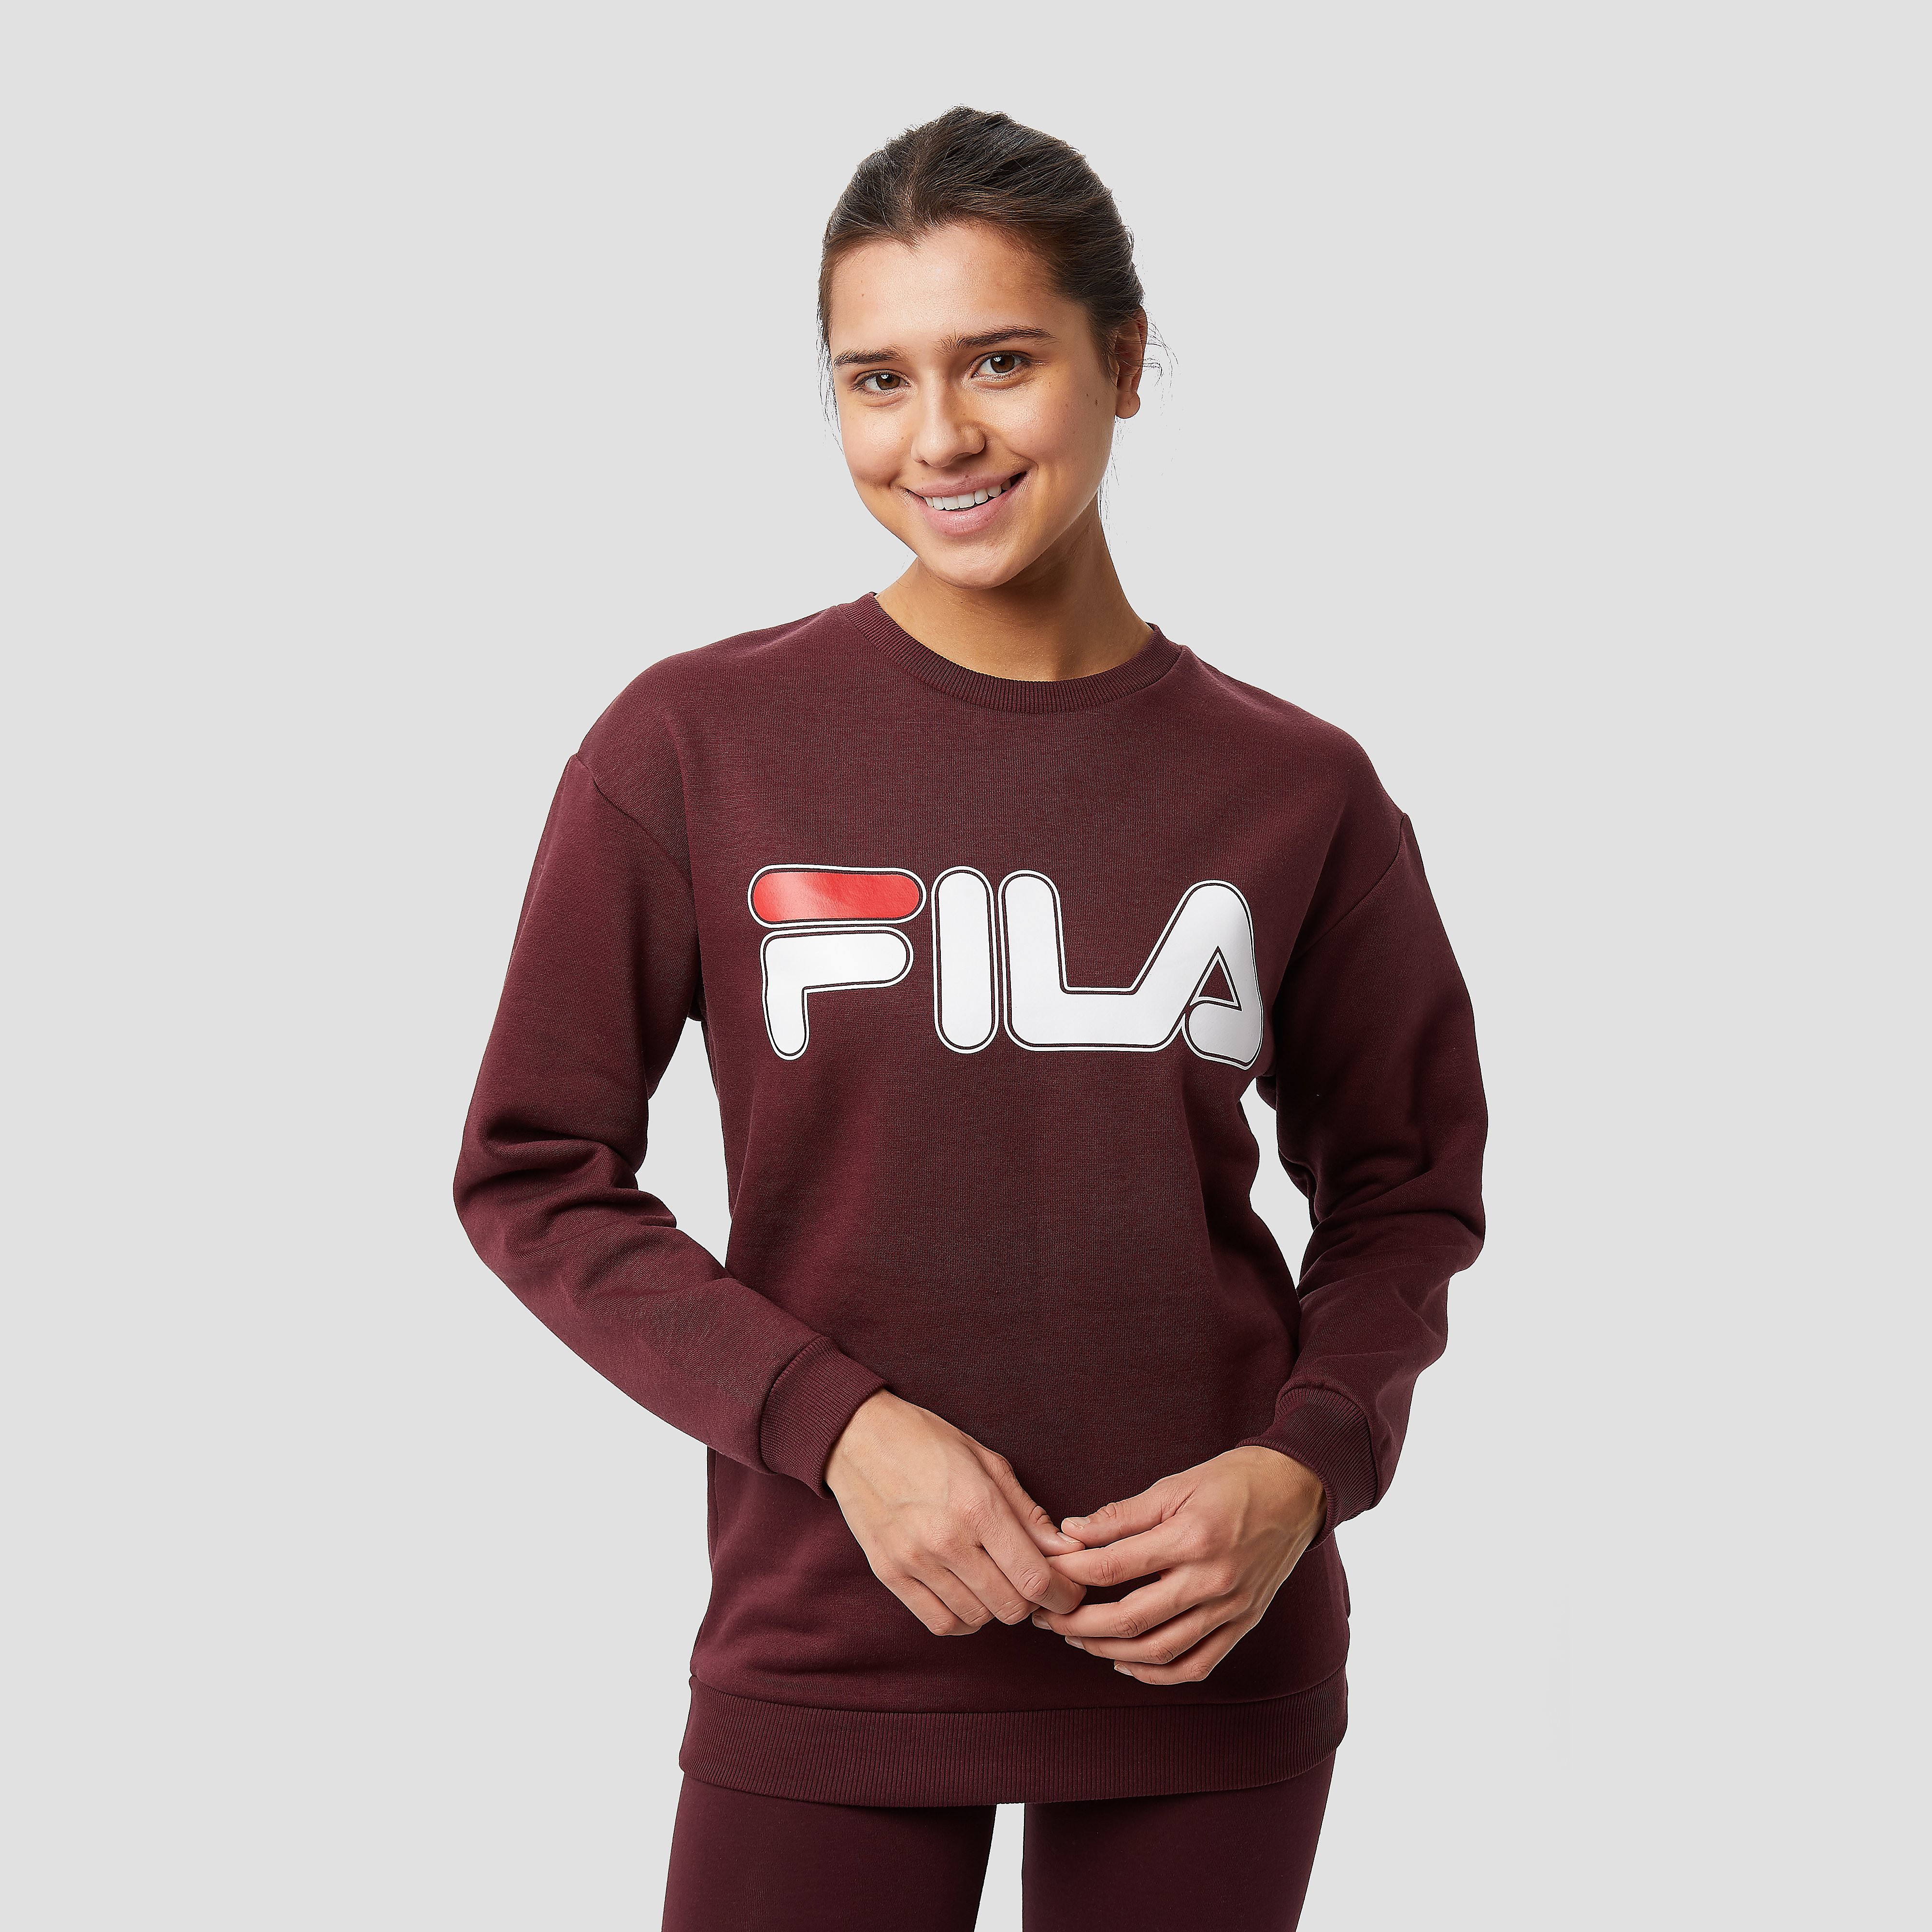 Fabriek onderbreken Kust FILA Cydonia 2 crew sweater bordeaux rood dames Dames | Online kopen via  Skishop4u.nl | Decathlon.nl